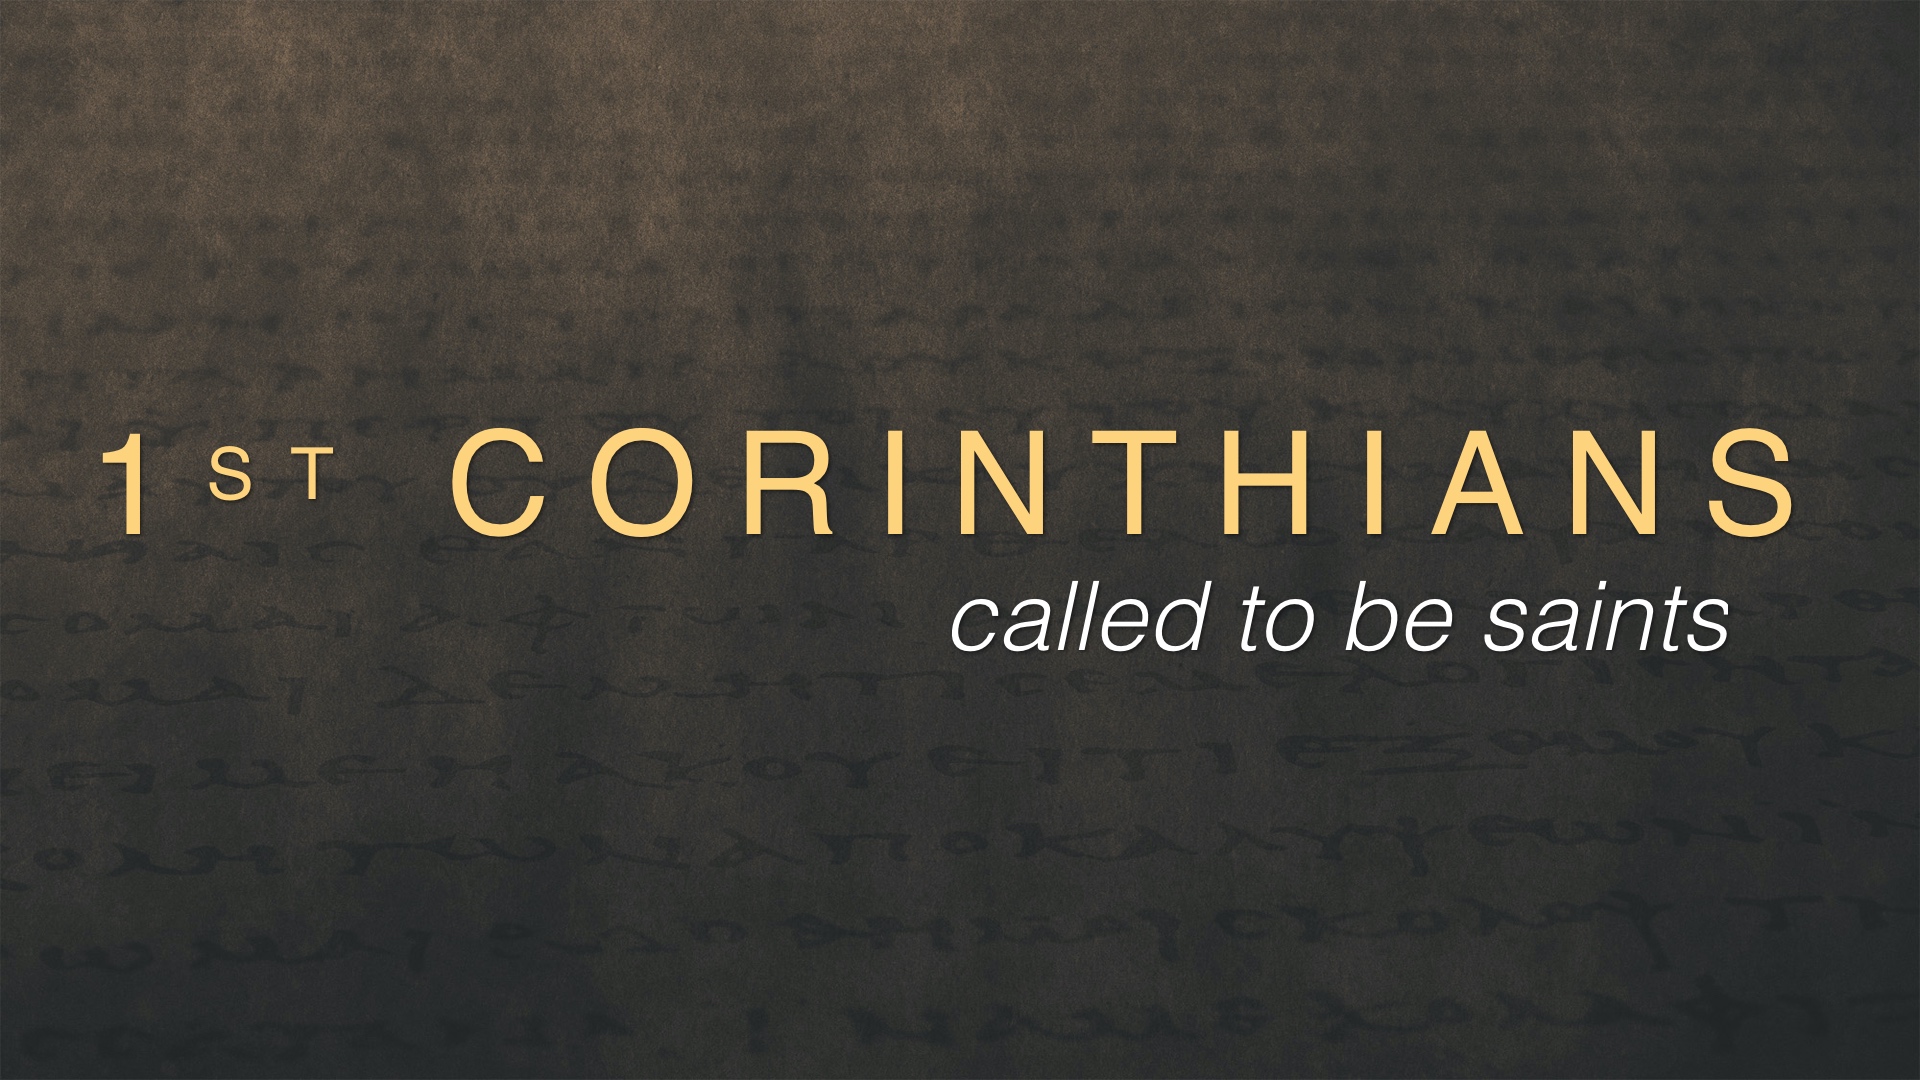 One Spiritual Body, Part 3 (1 Corinthians 12:12-13)